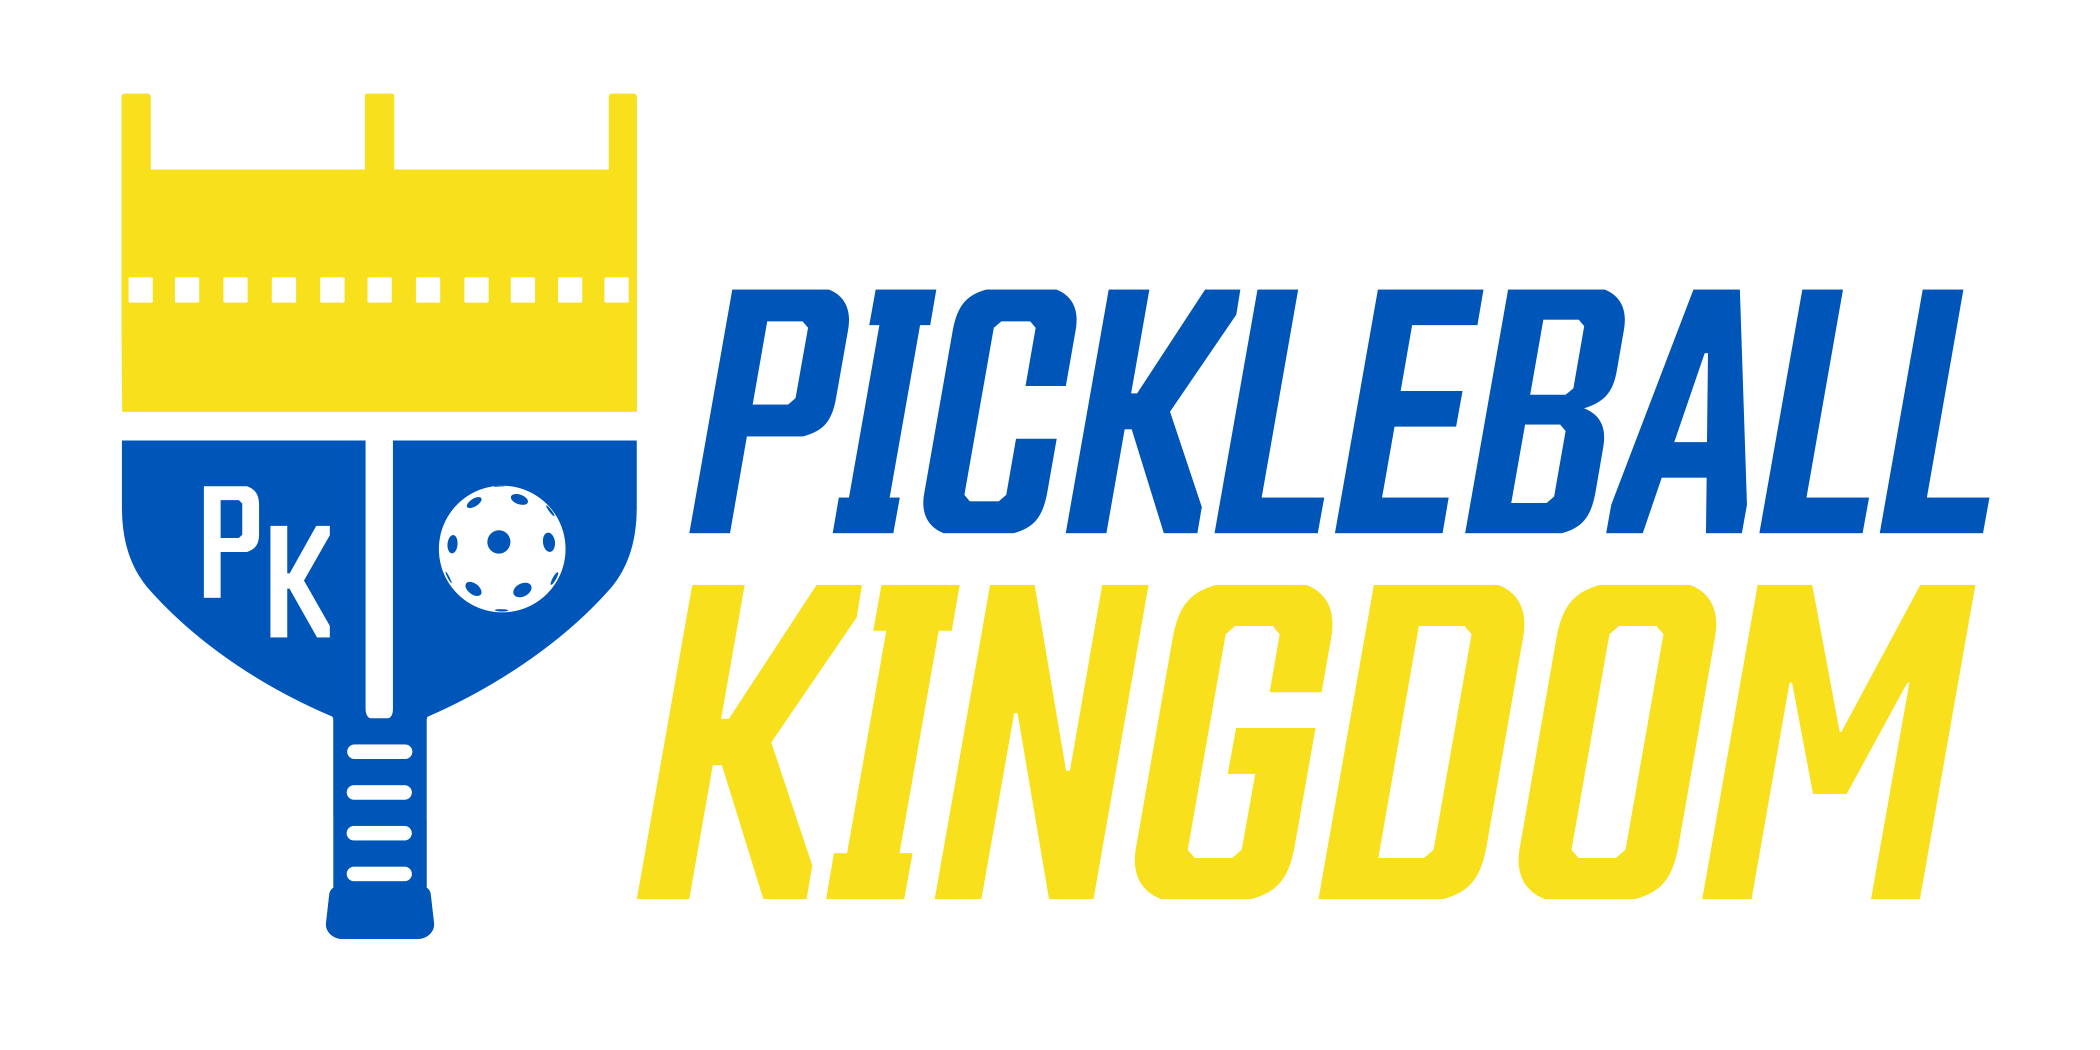 Pickleball Kingdom logo